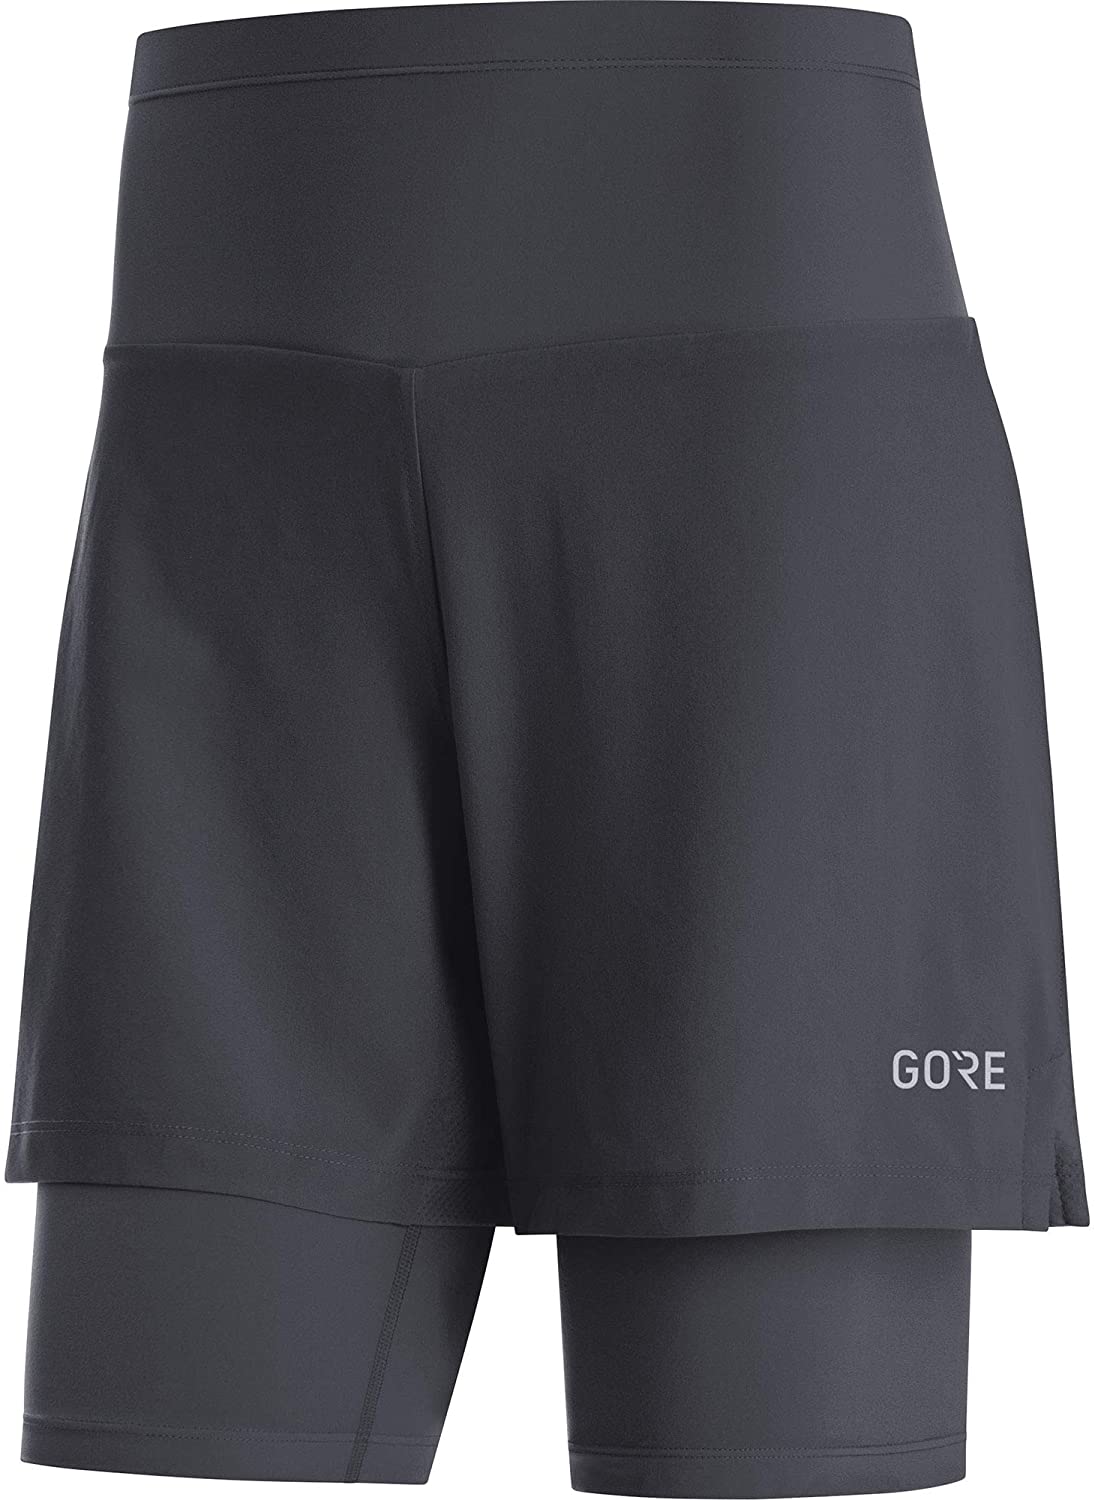 Gore Wear R5 2in1 Shorts - Running shorts - Women's